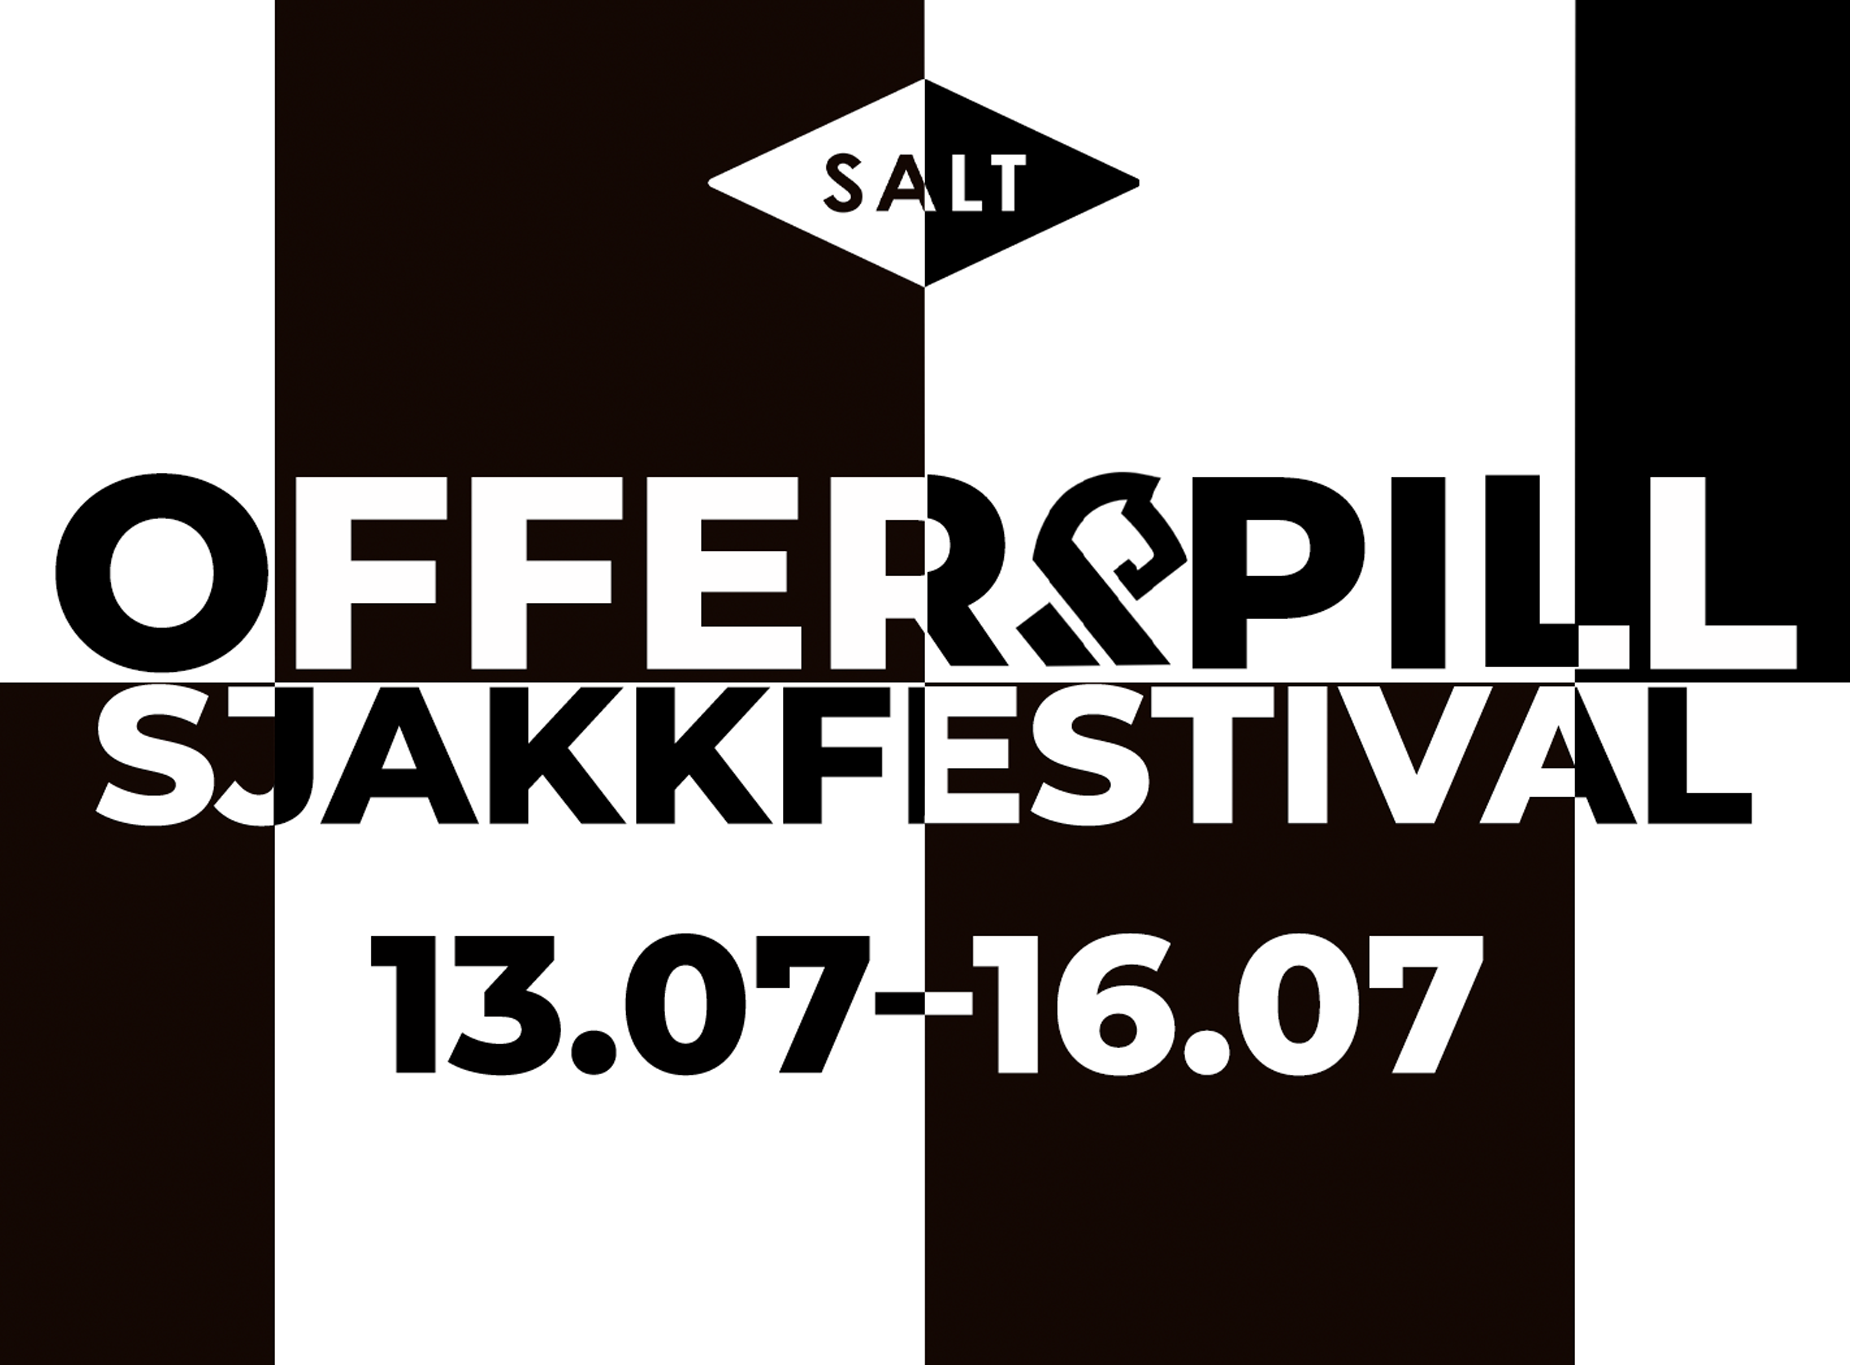 Offerspill Sjakkfestival 2023 presale information on freepresalepasswords.com